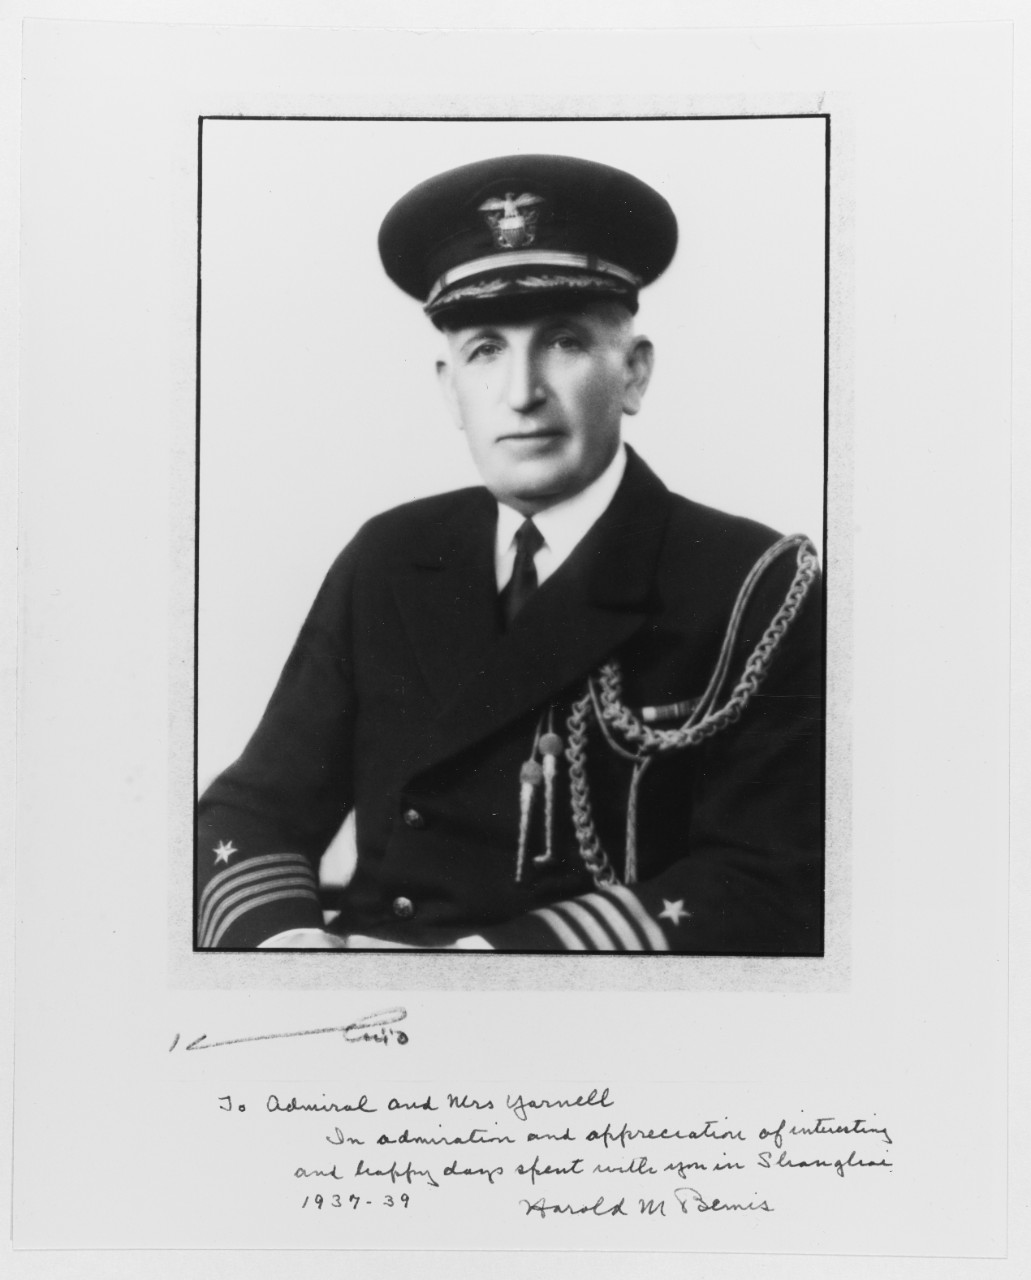 Captain H. M. Bemis, USN